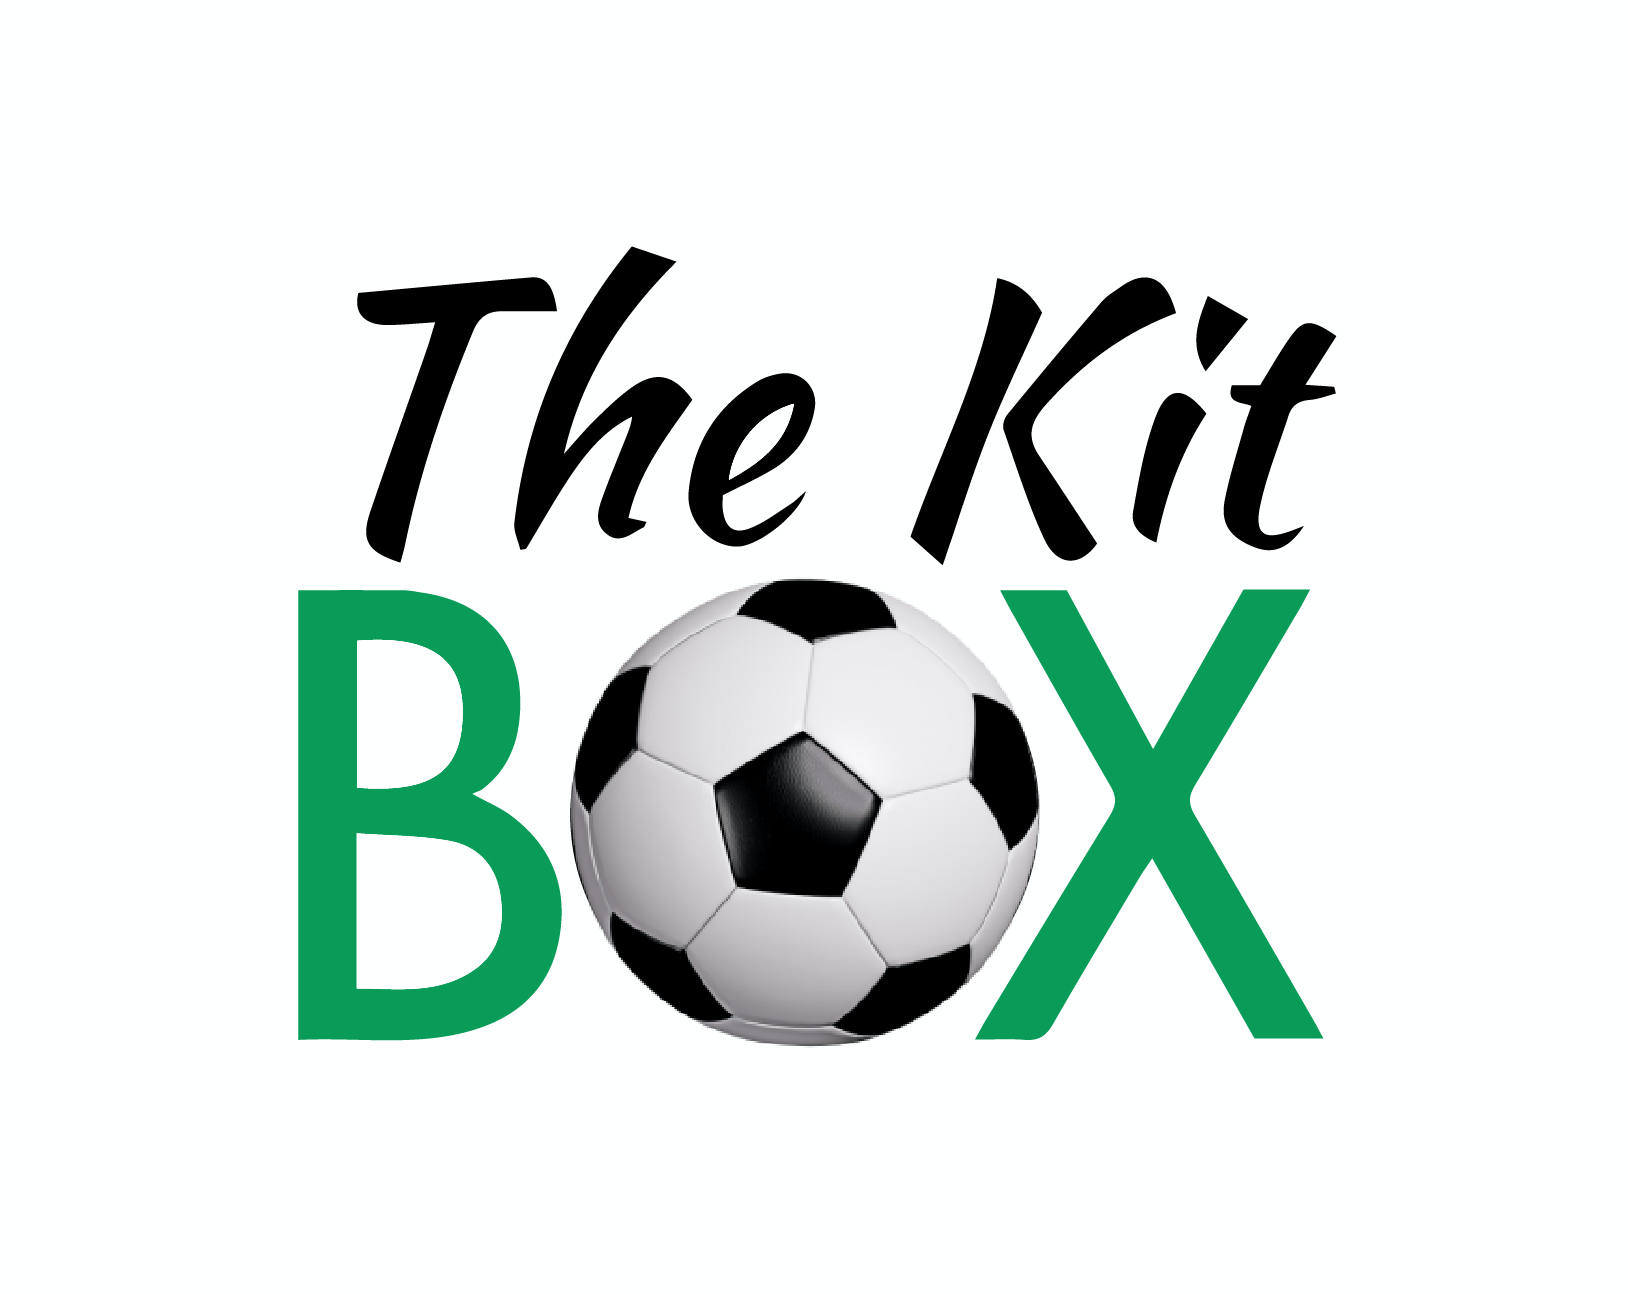 The KitBox